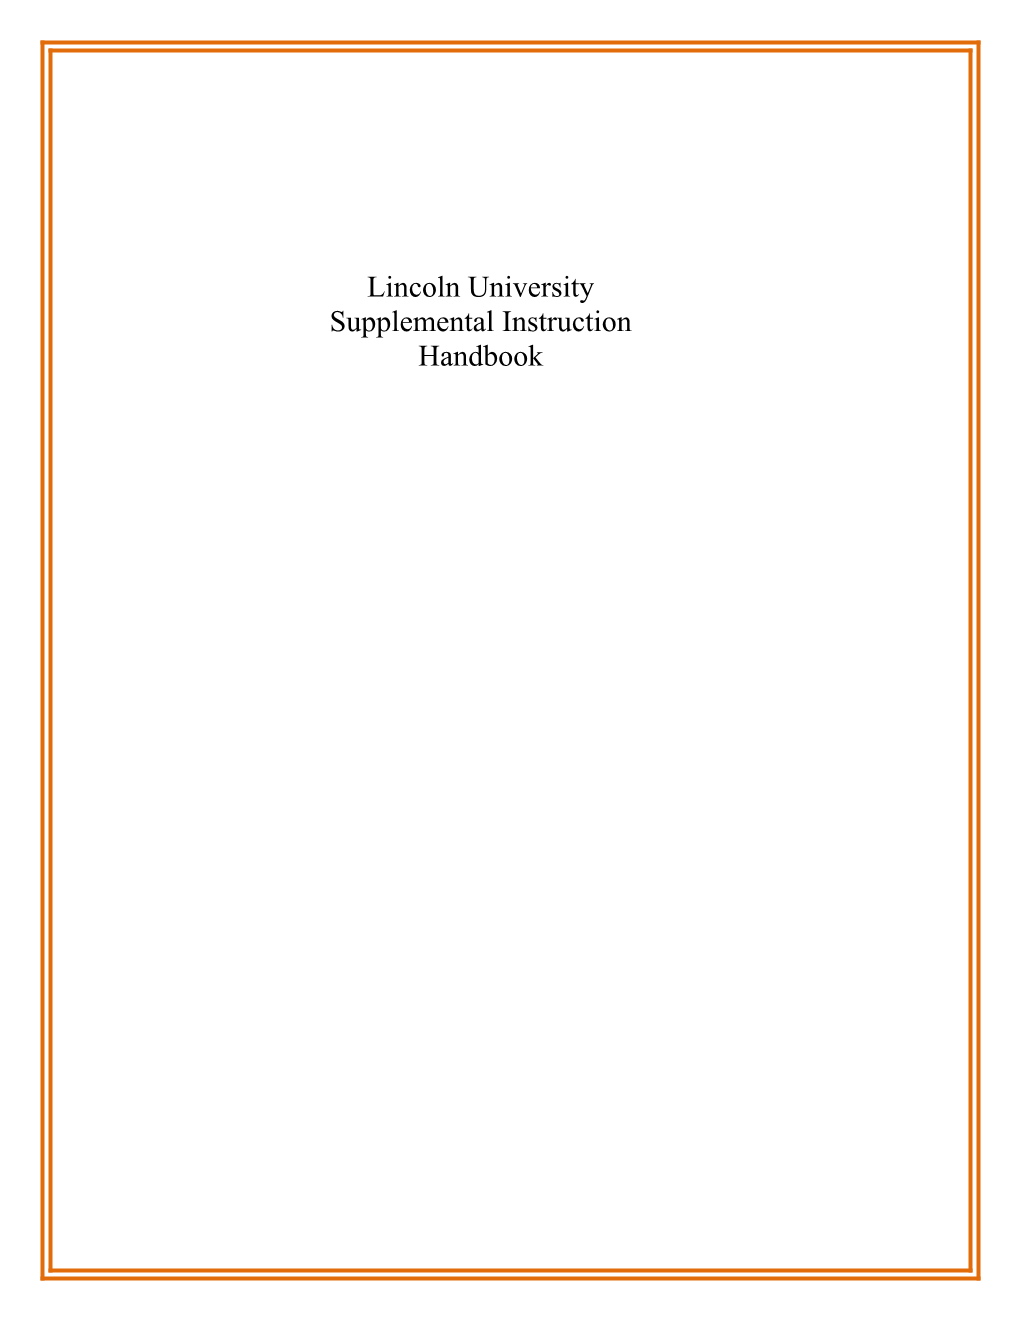 Lincoln University Supplemental Instruction